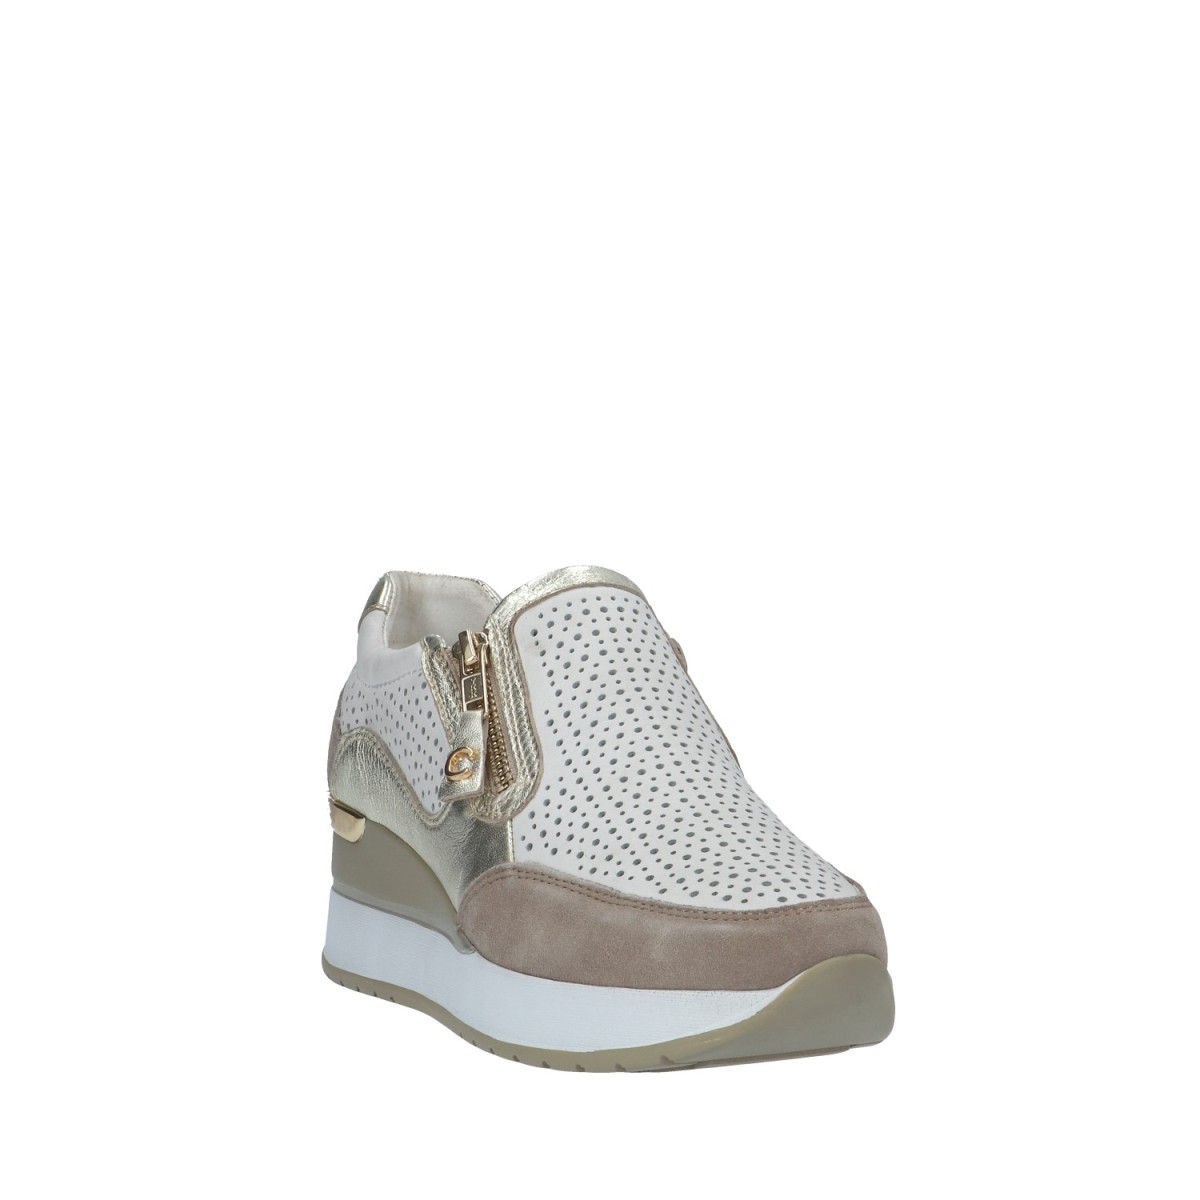 Cinzia soft Sneaker Beige/bianco Zeppa IV2521476G 001